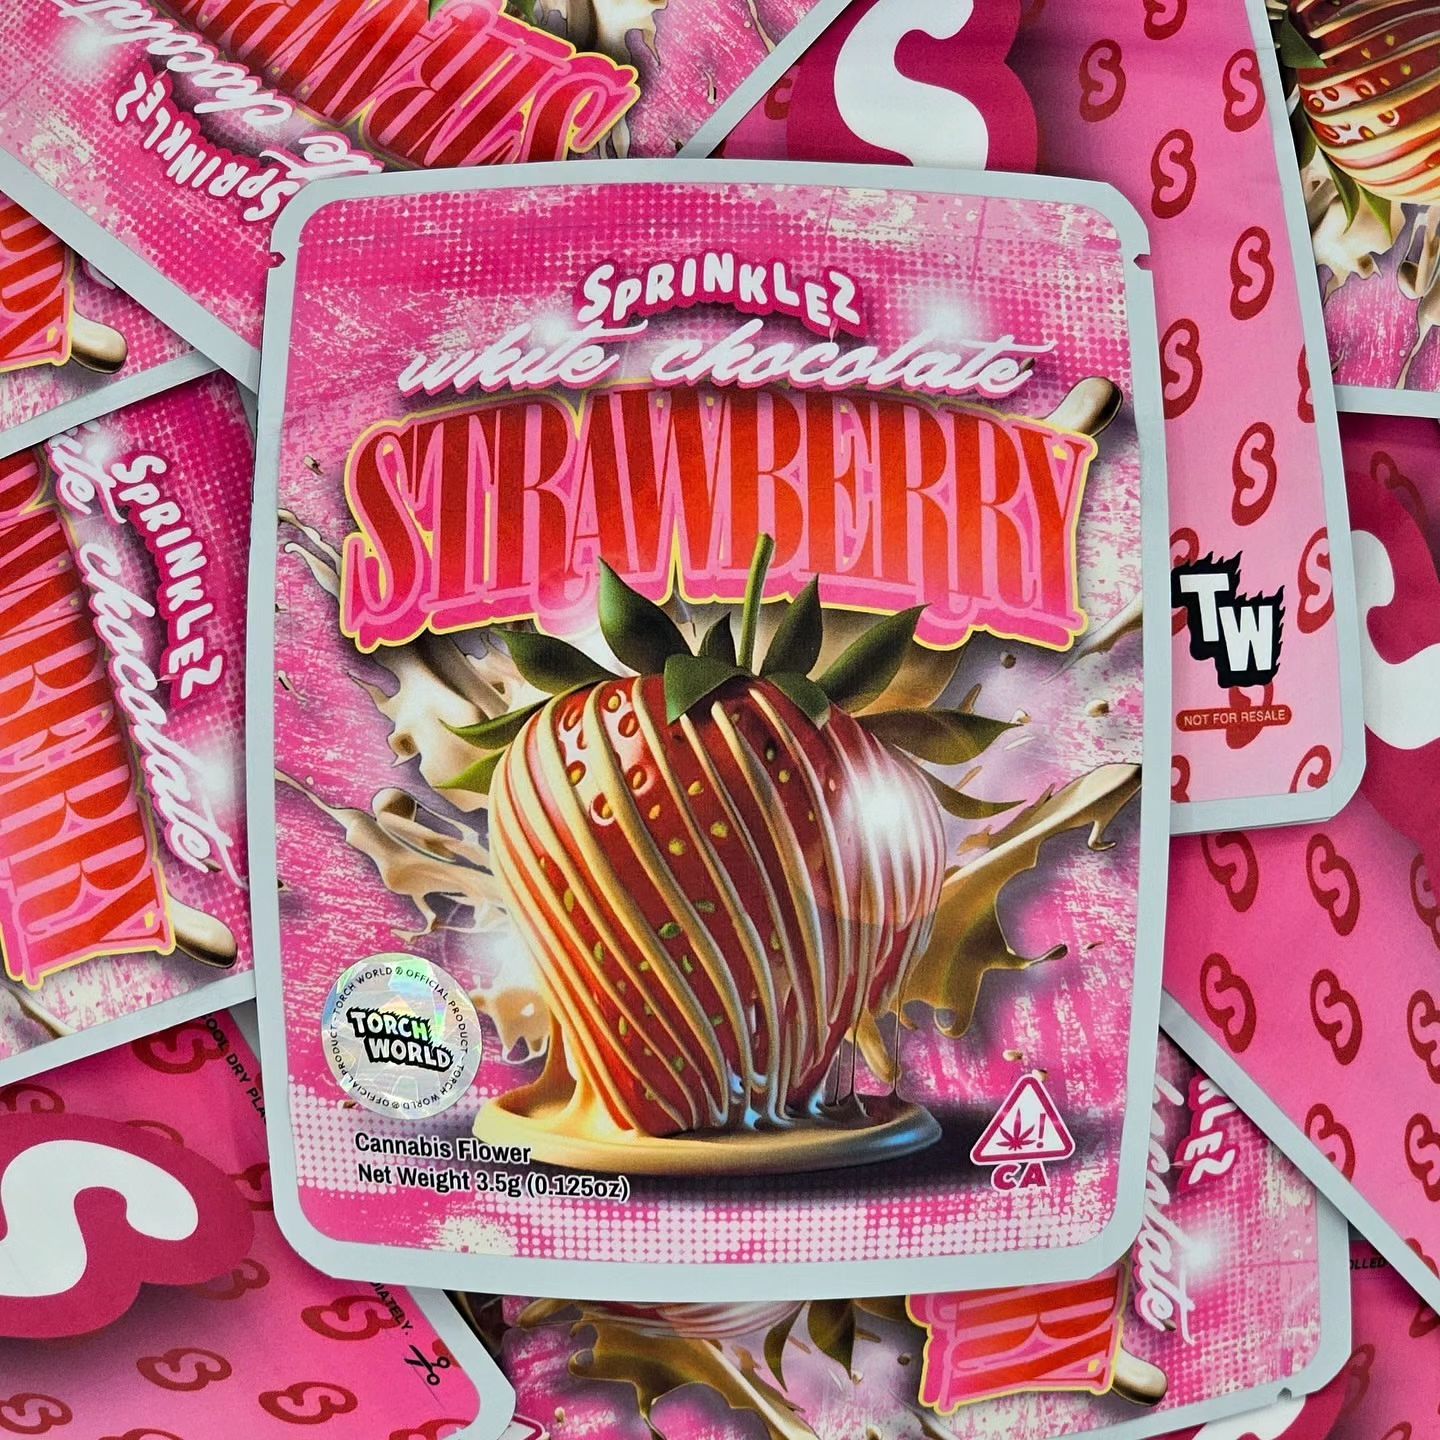 White Chocolate Strawberry Buy Sprinklez Nyc Buy Sprinklez White Chocolate Strawberry 3571